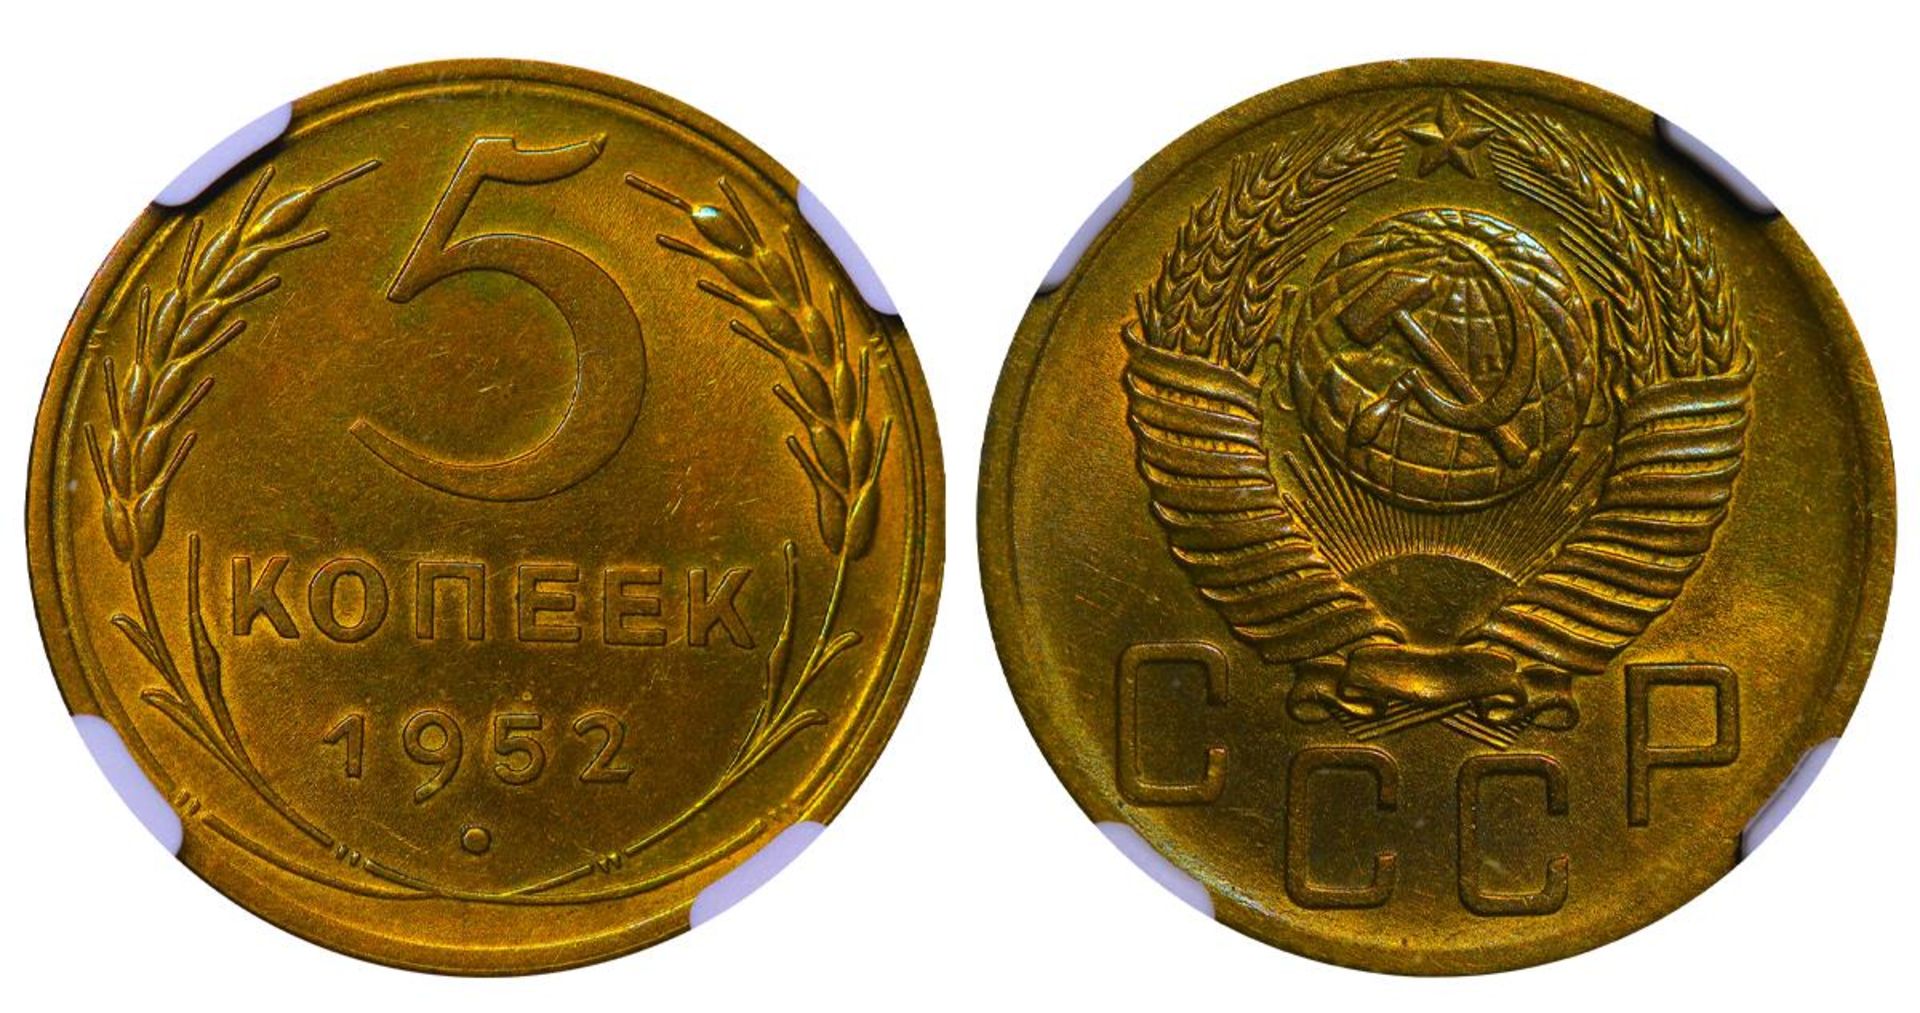 Soviet Union, 5 Kopecks, 1952 year, NGC, MS 62